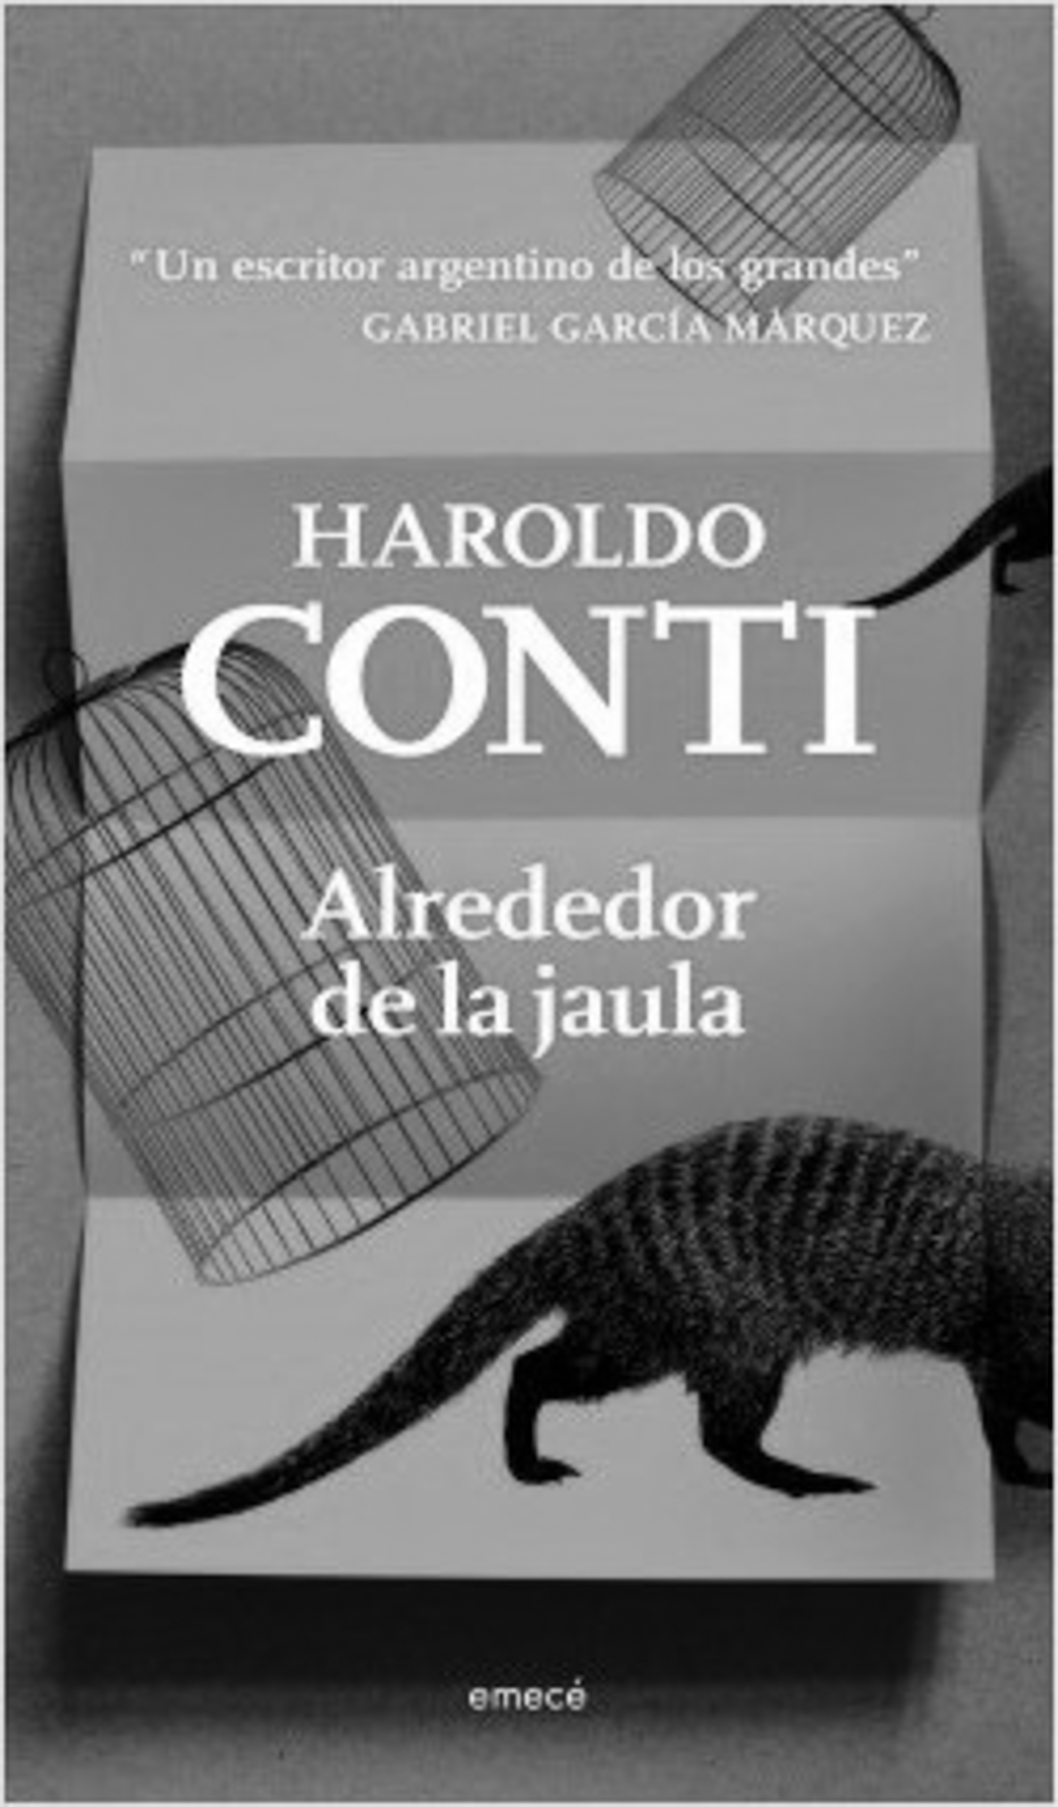 haroldo-conti-literatura-jaula